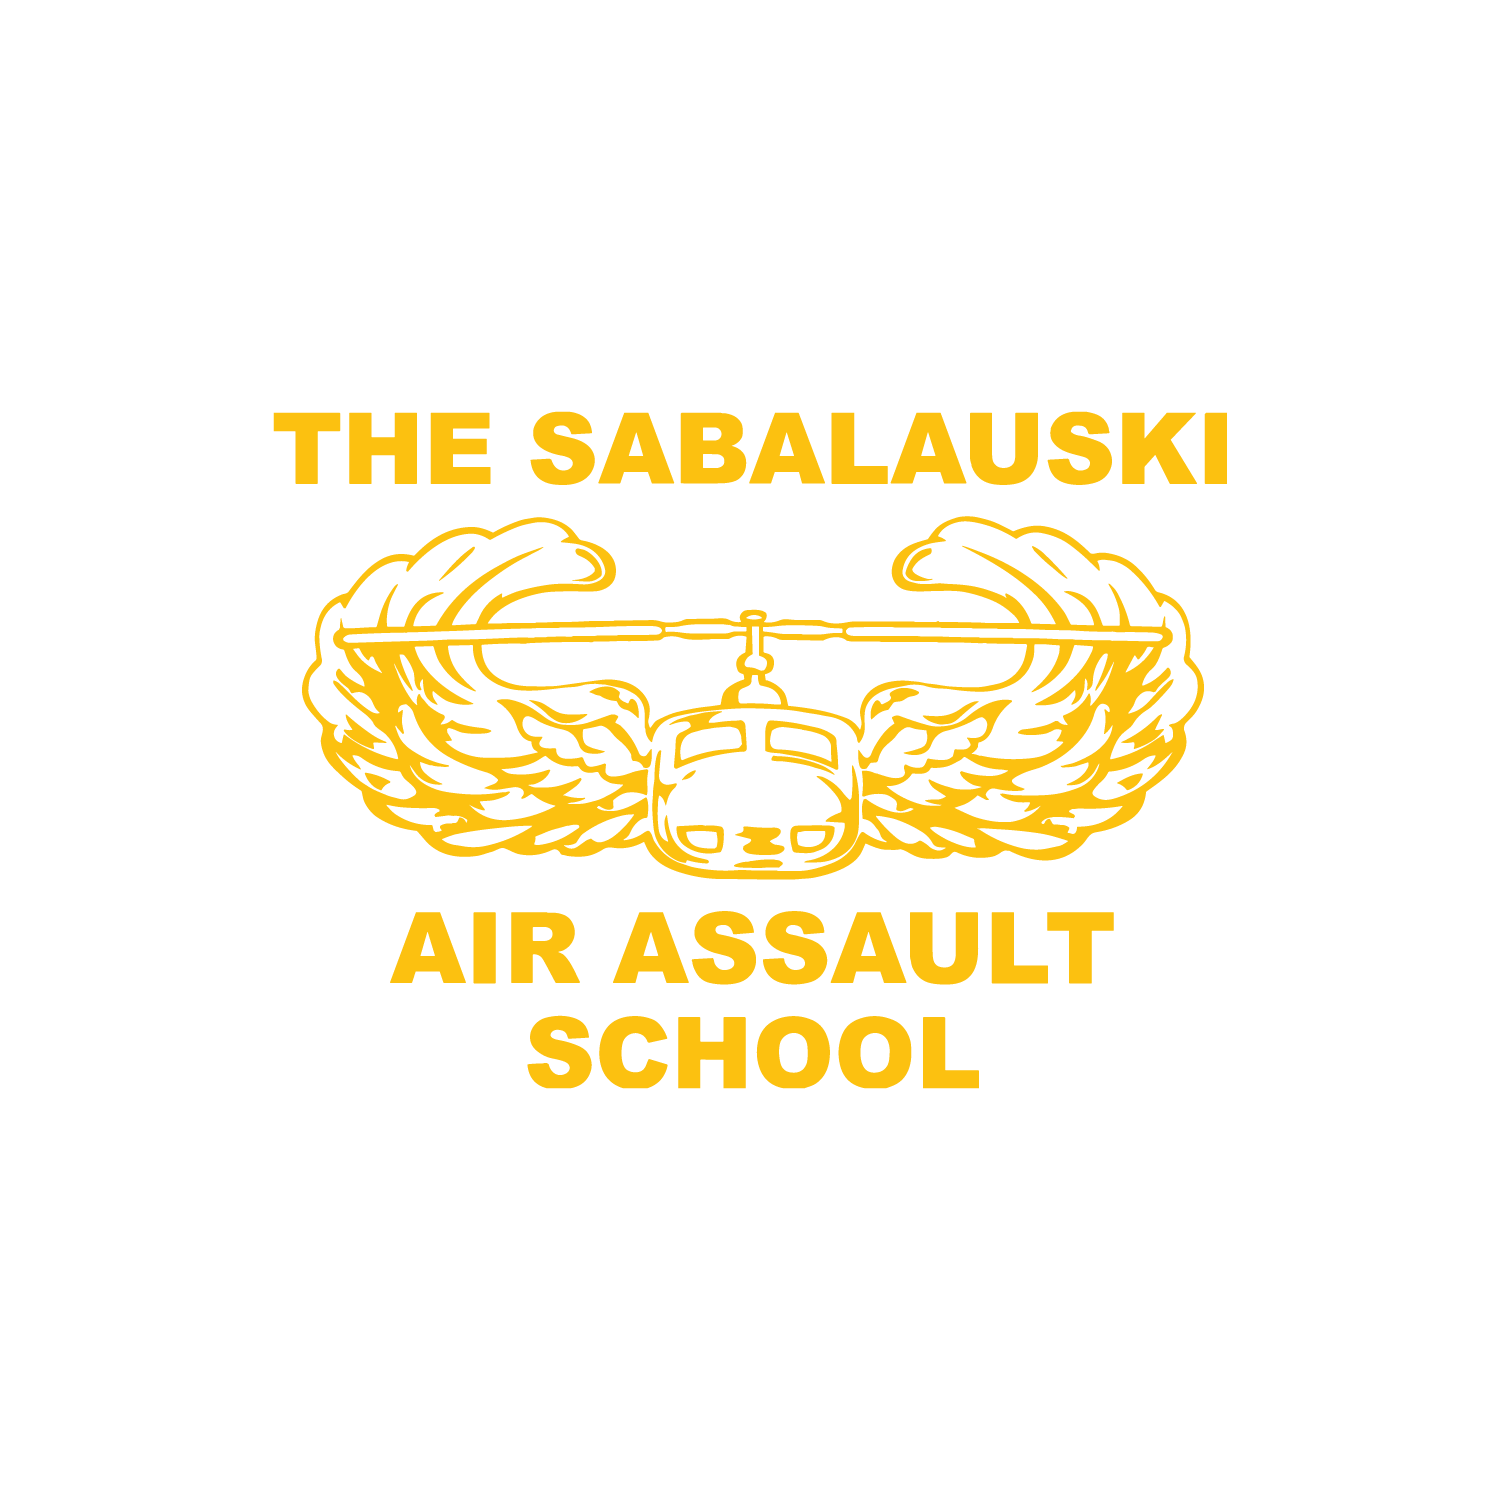 The Sabalauski Air Assault School